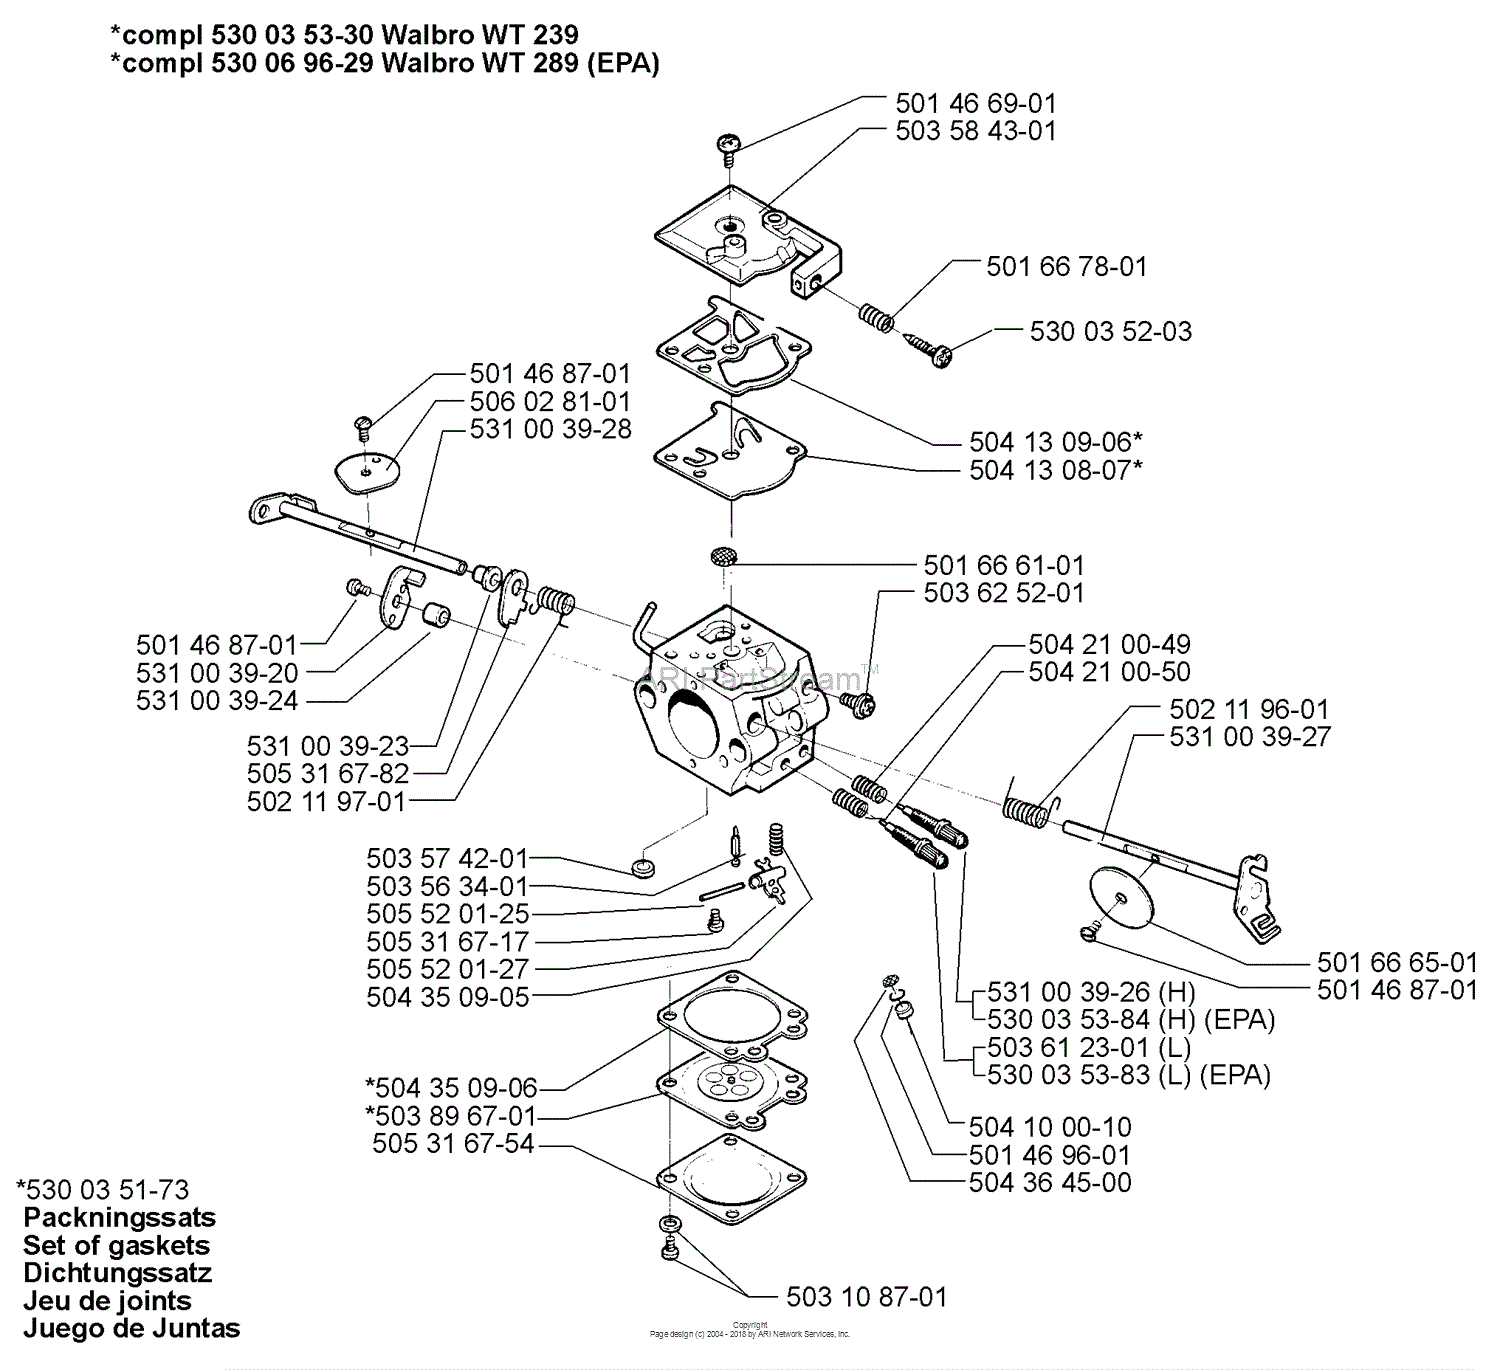 walbro wt carburetor diagram